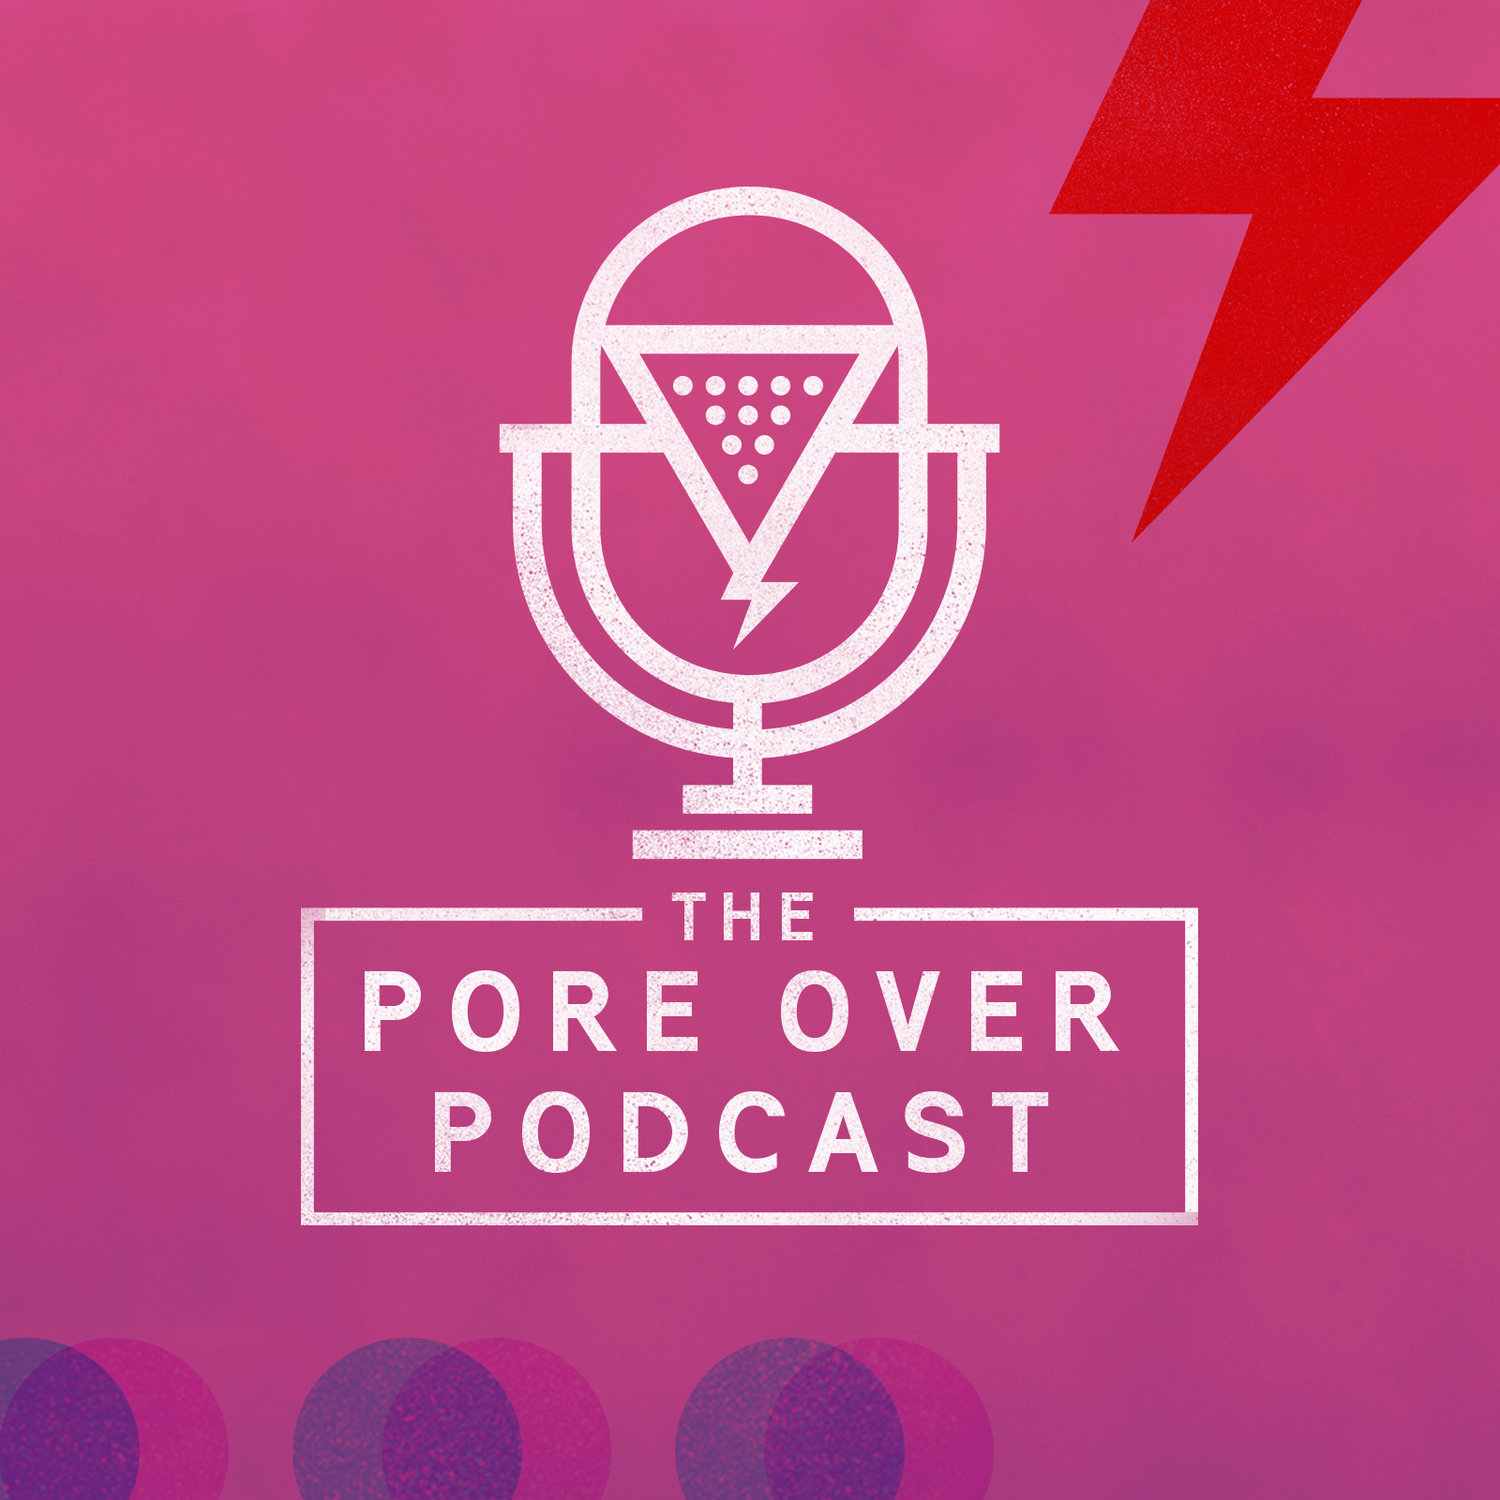 The Pore Over Podcast